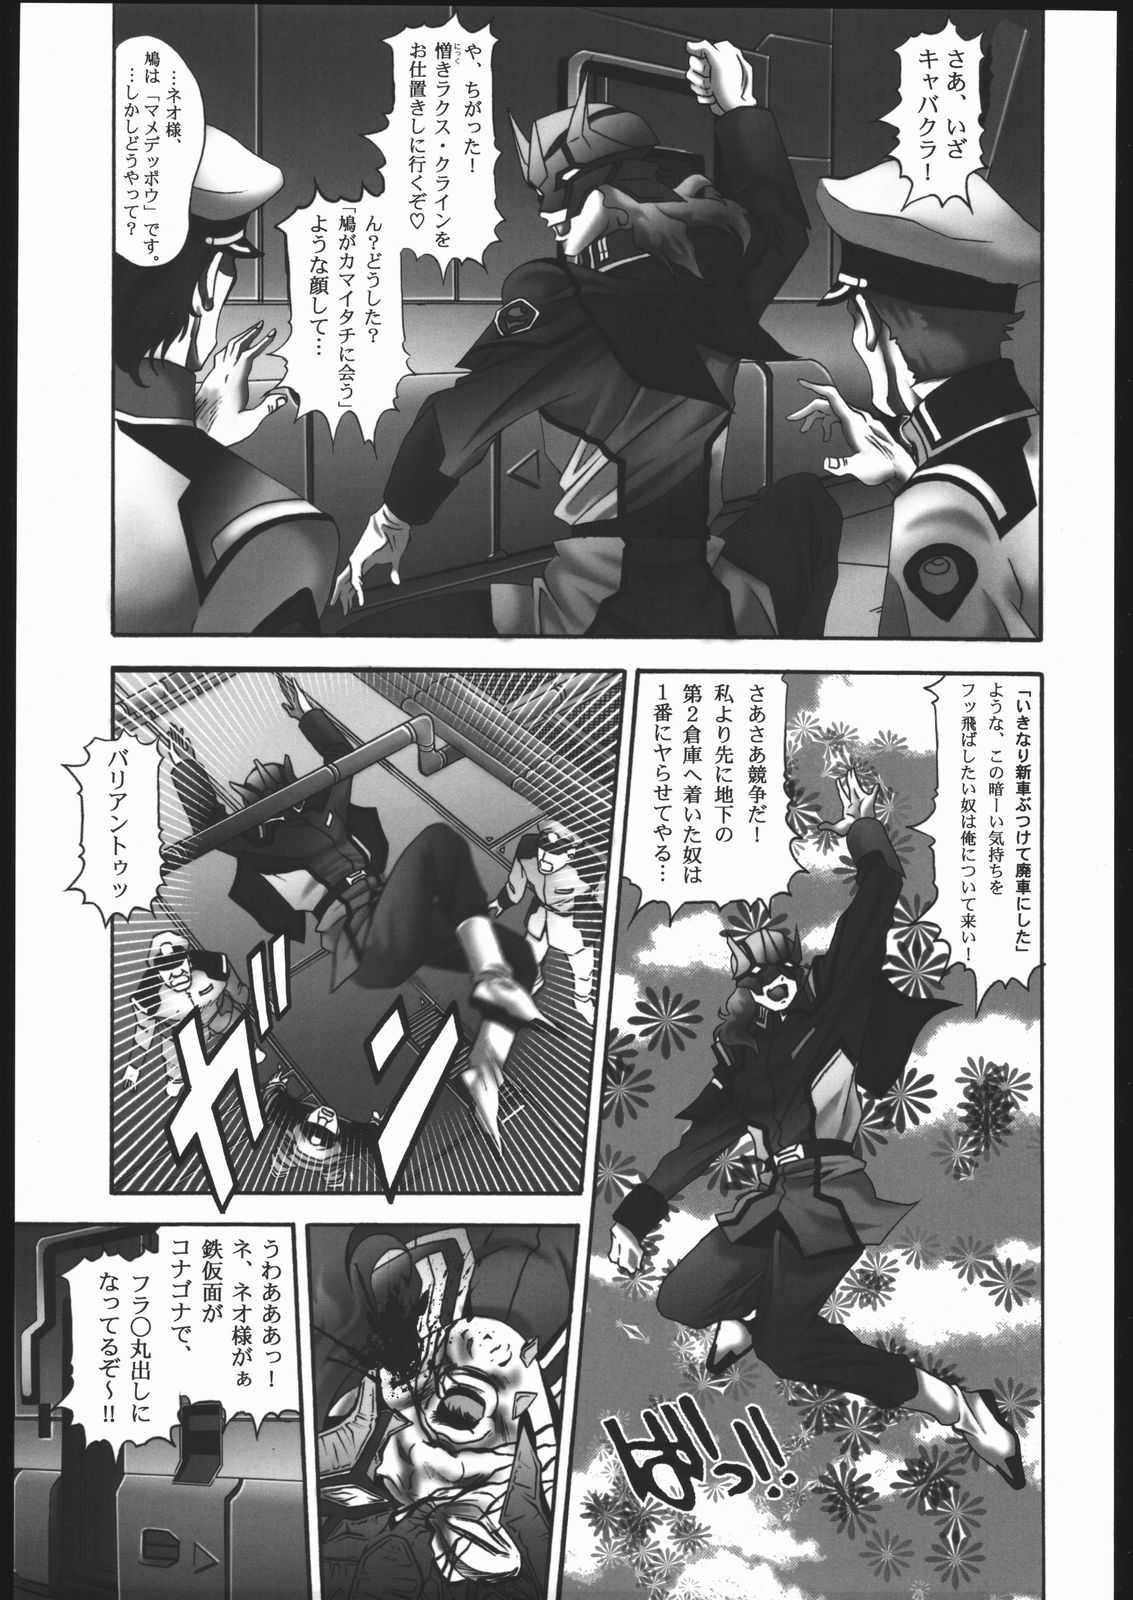 [Gundam] Nise Mono Nante Ko Banai De... (STUDIO HAMMER ROCK) ニセ者なんて呼ばないで&hellip;